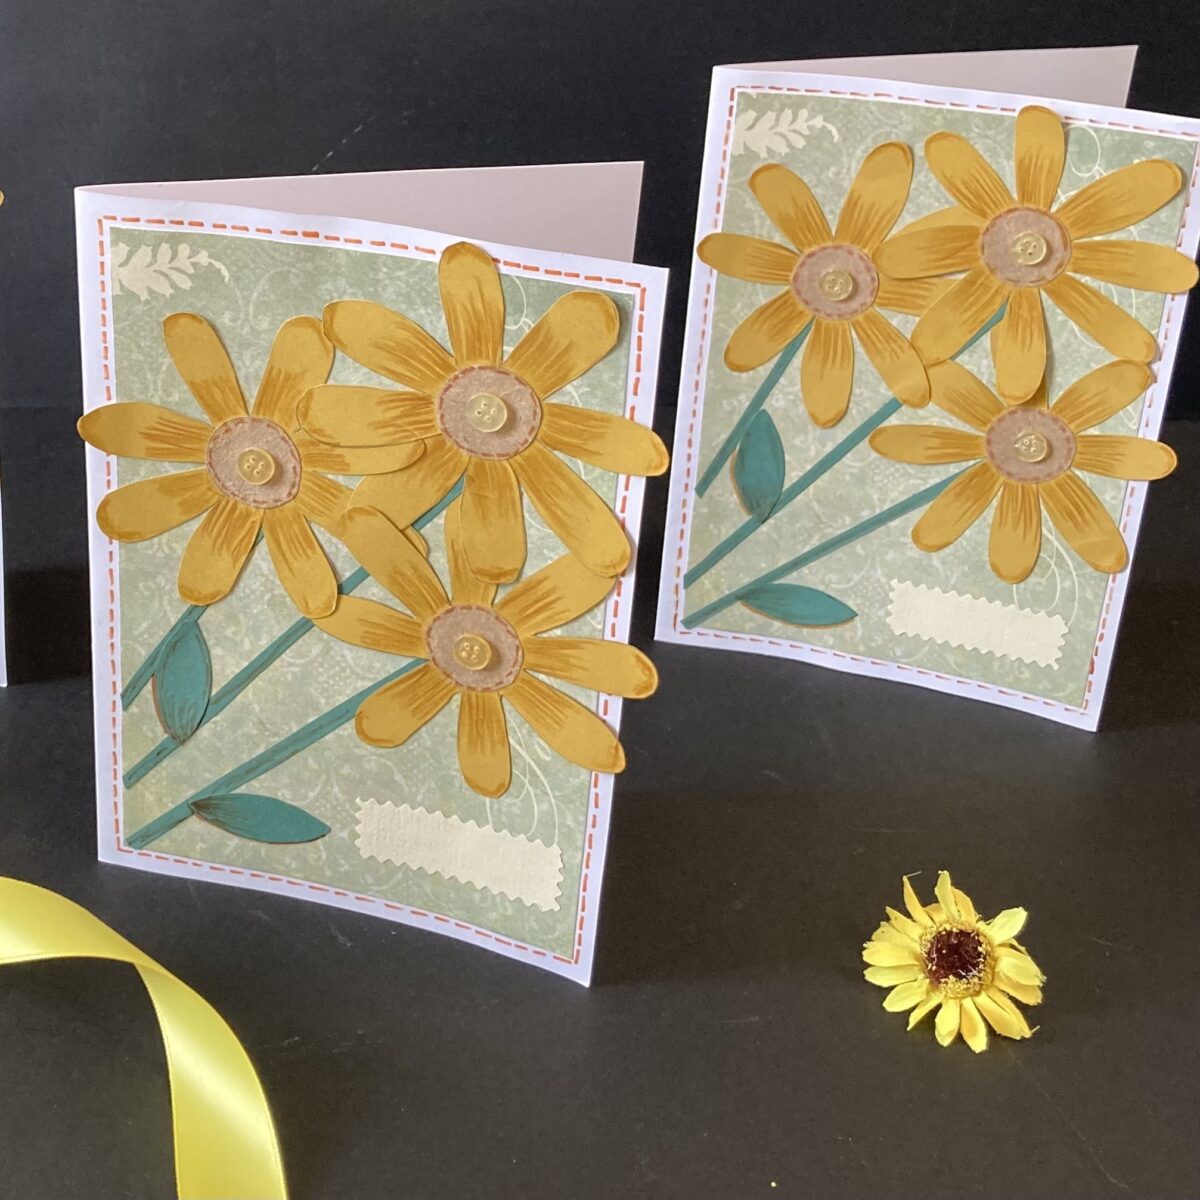 Sunflower greeting card